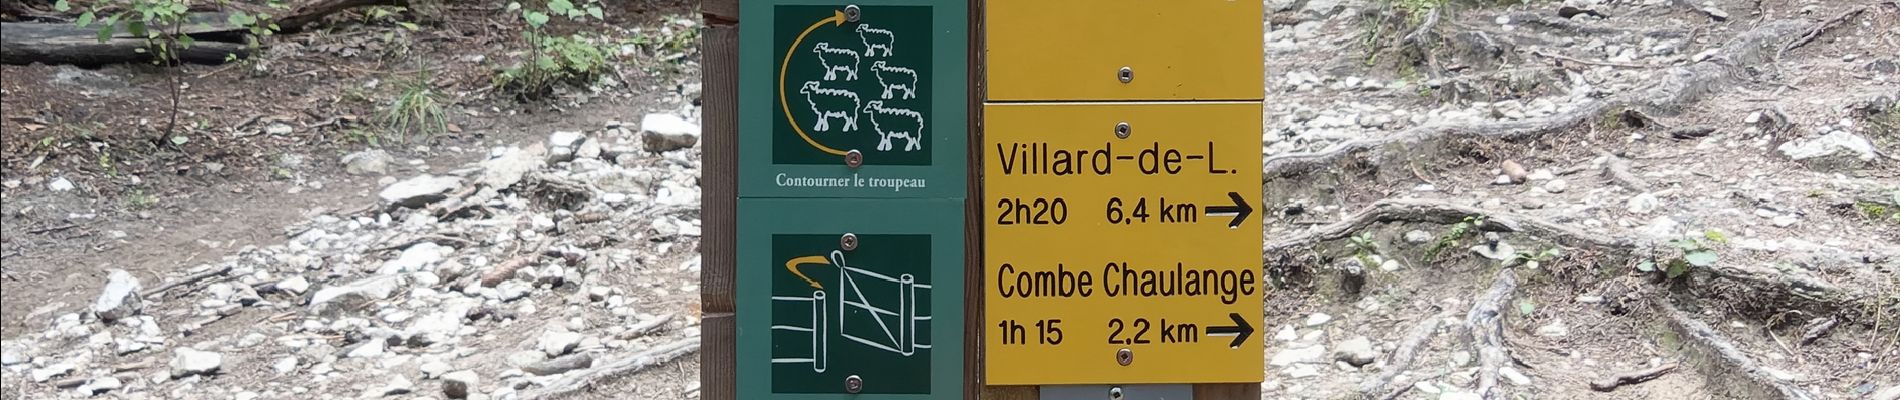 Percorso Marcia Villard-de-Lans - Le Pic Saint-Michel (Villard-de-Lans) - Photo